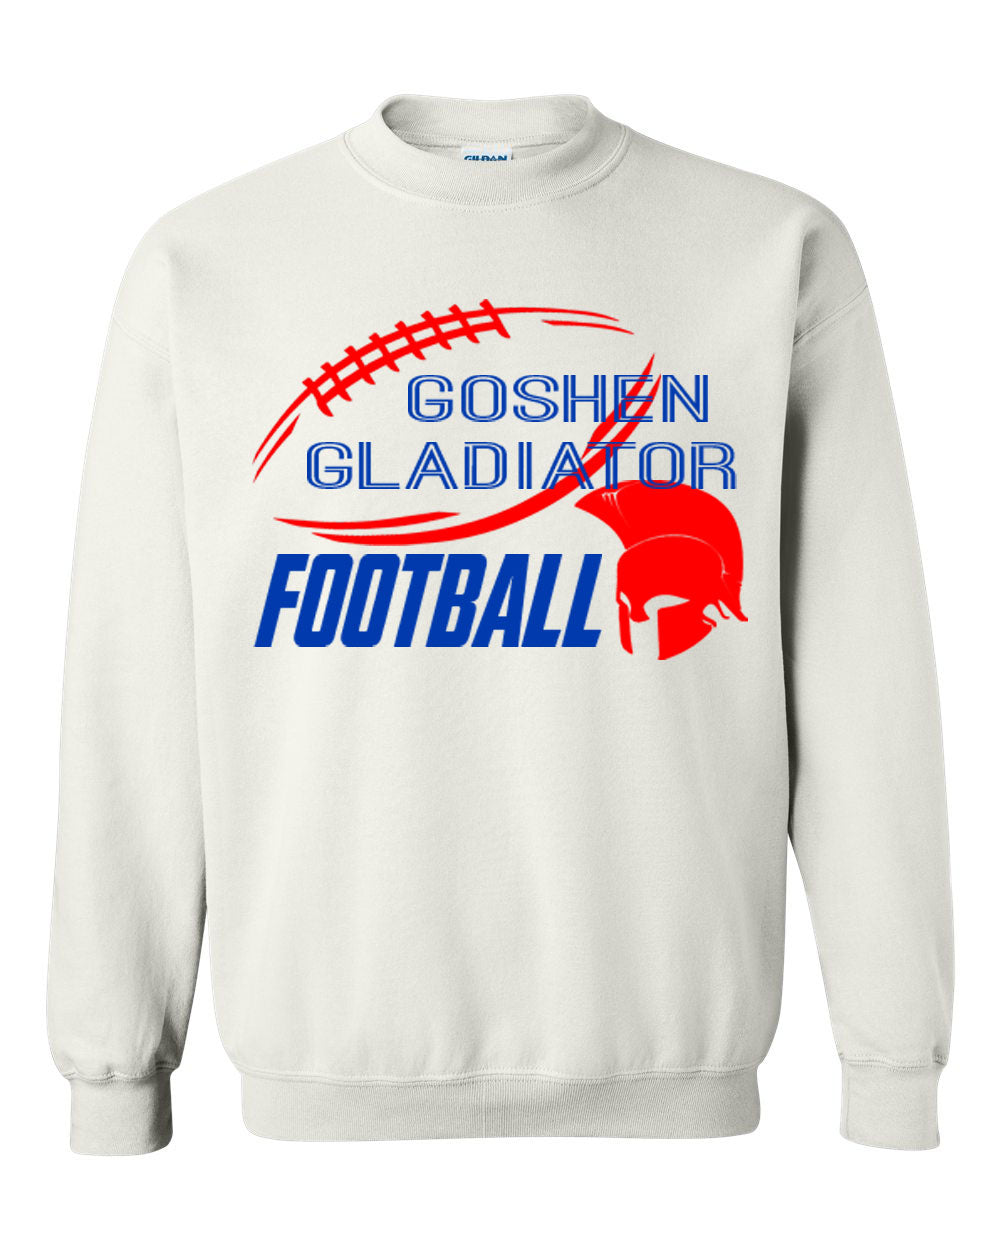 Goshen Football design 6 non hooded sweatshirt